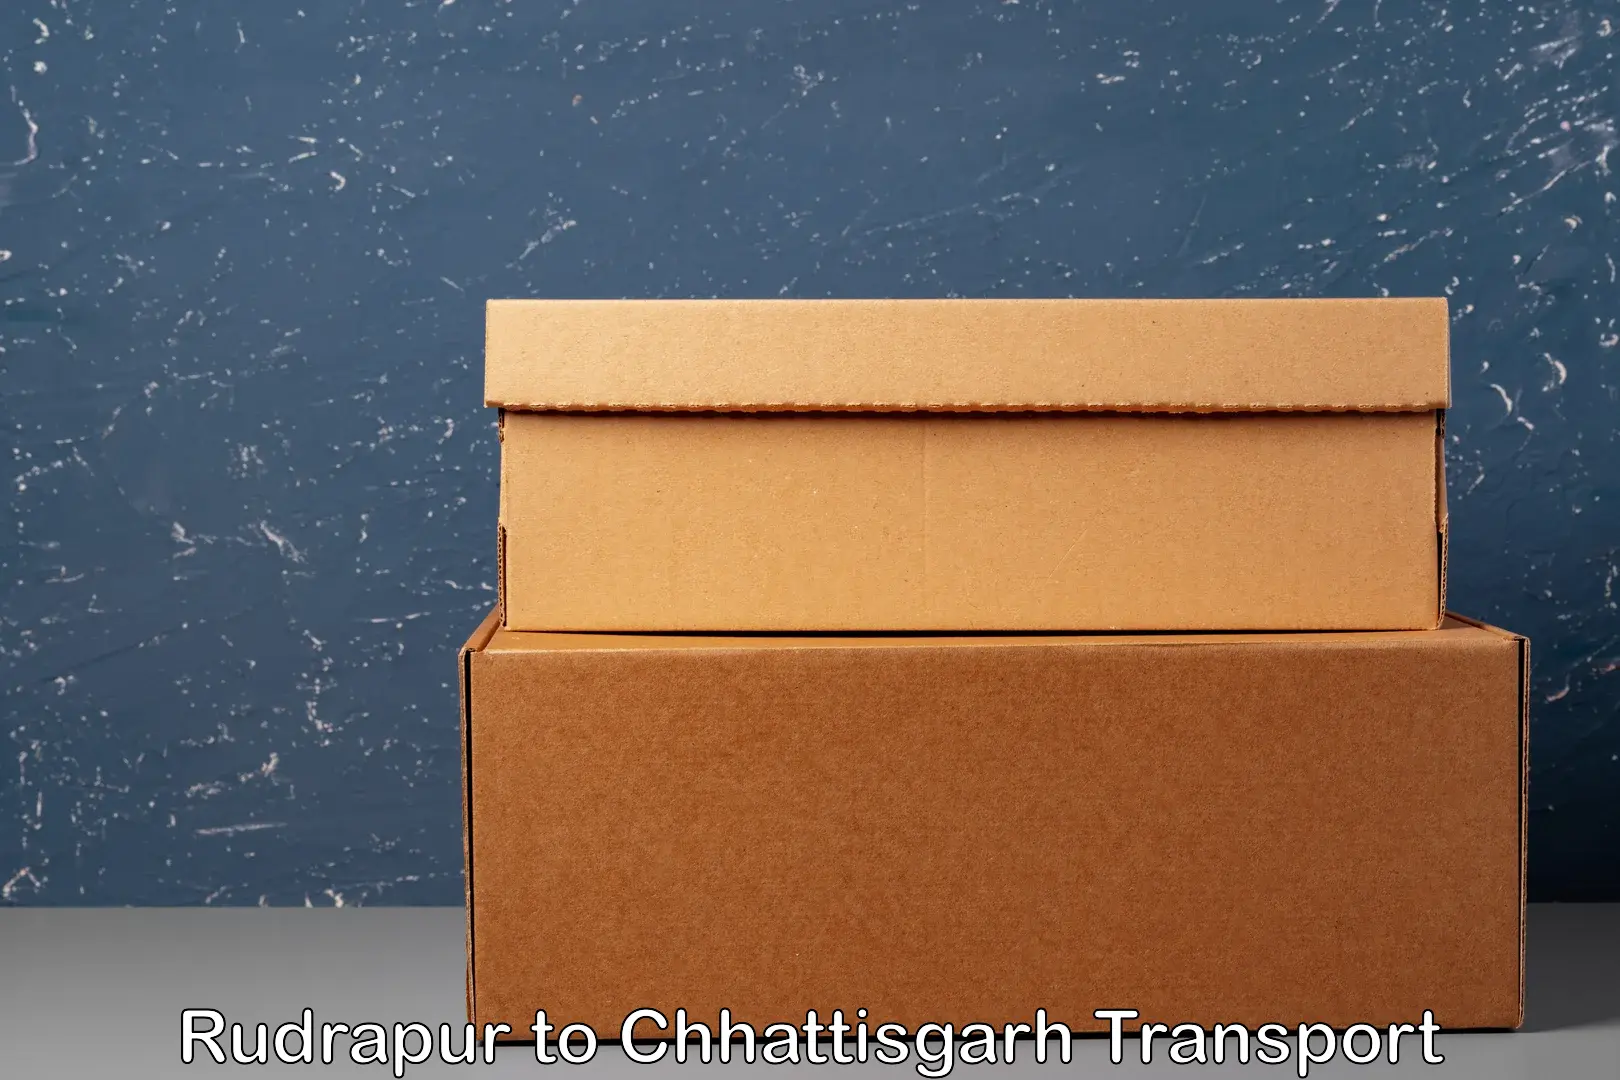 Two wheeler parcel service in Rudrapur to Chhattisgarh